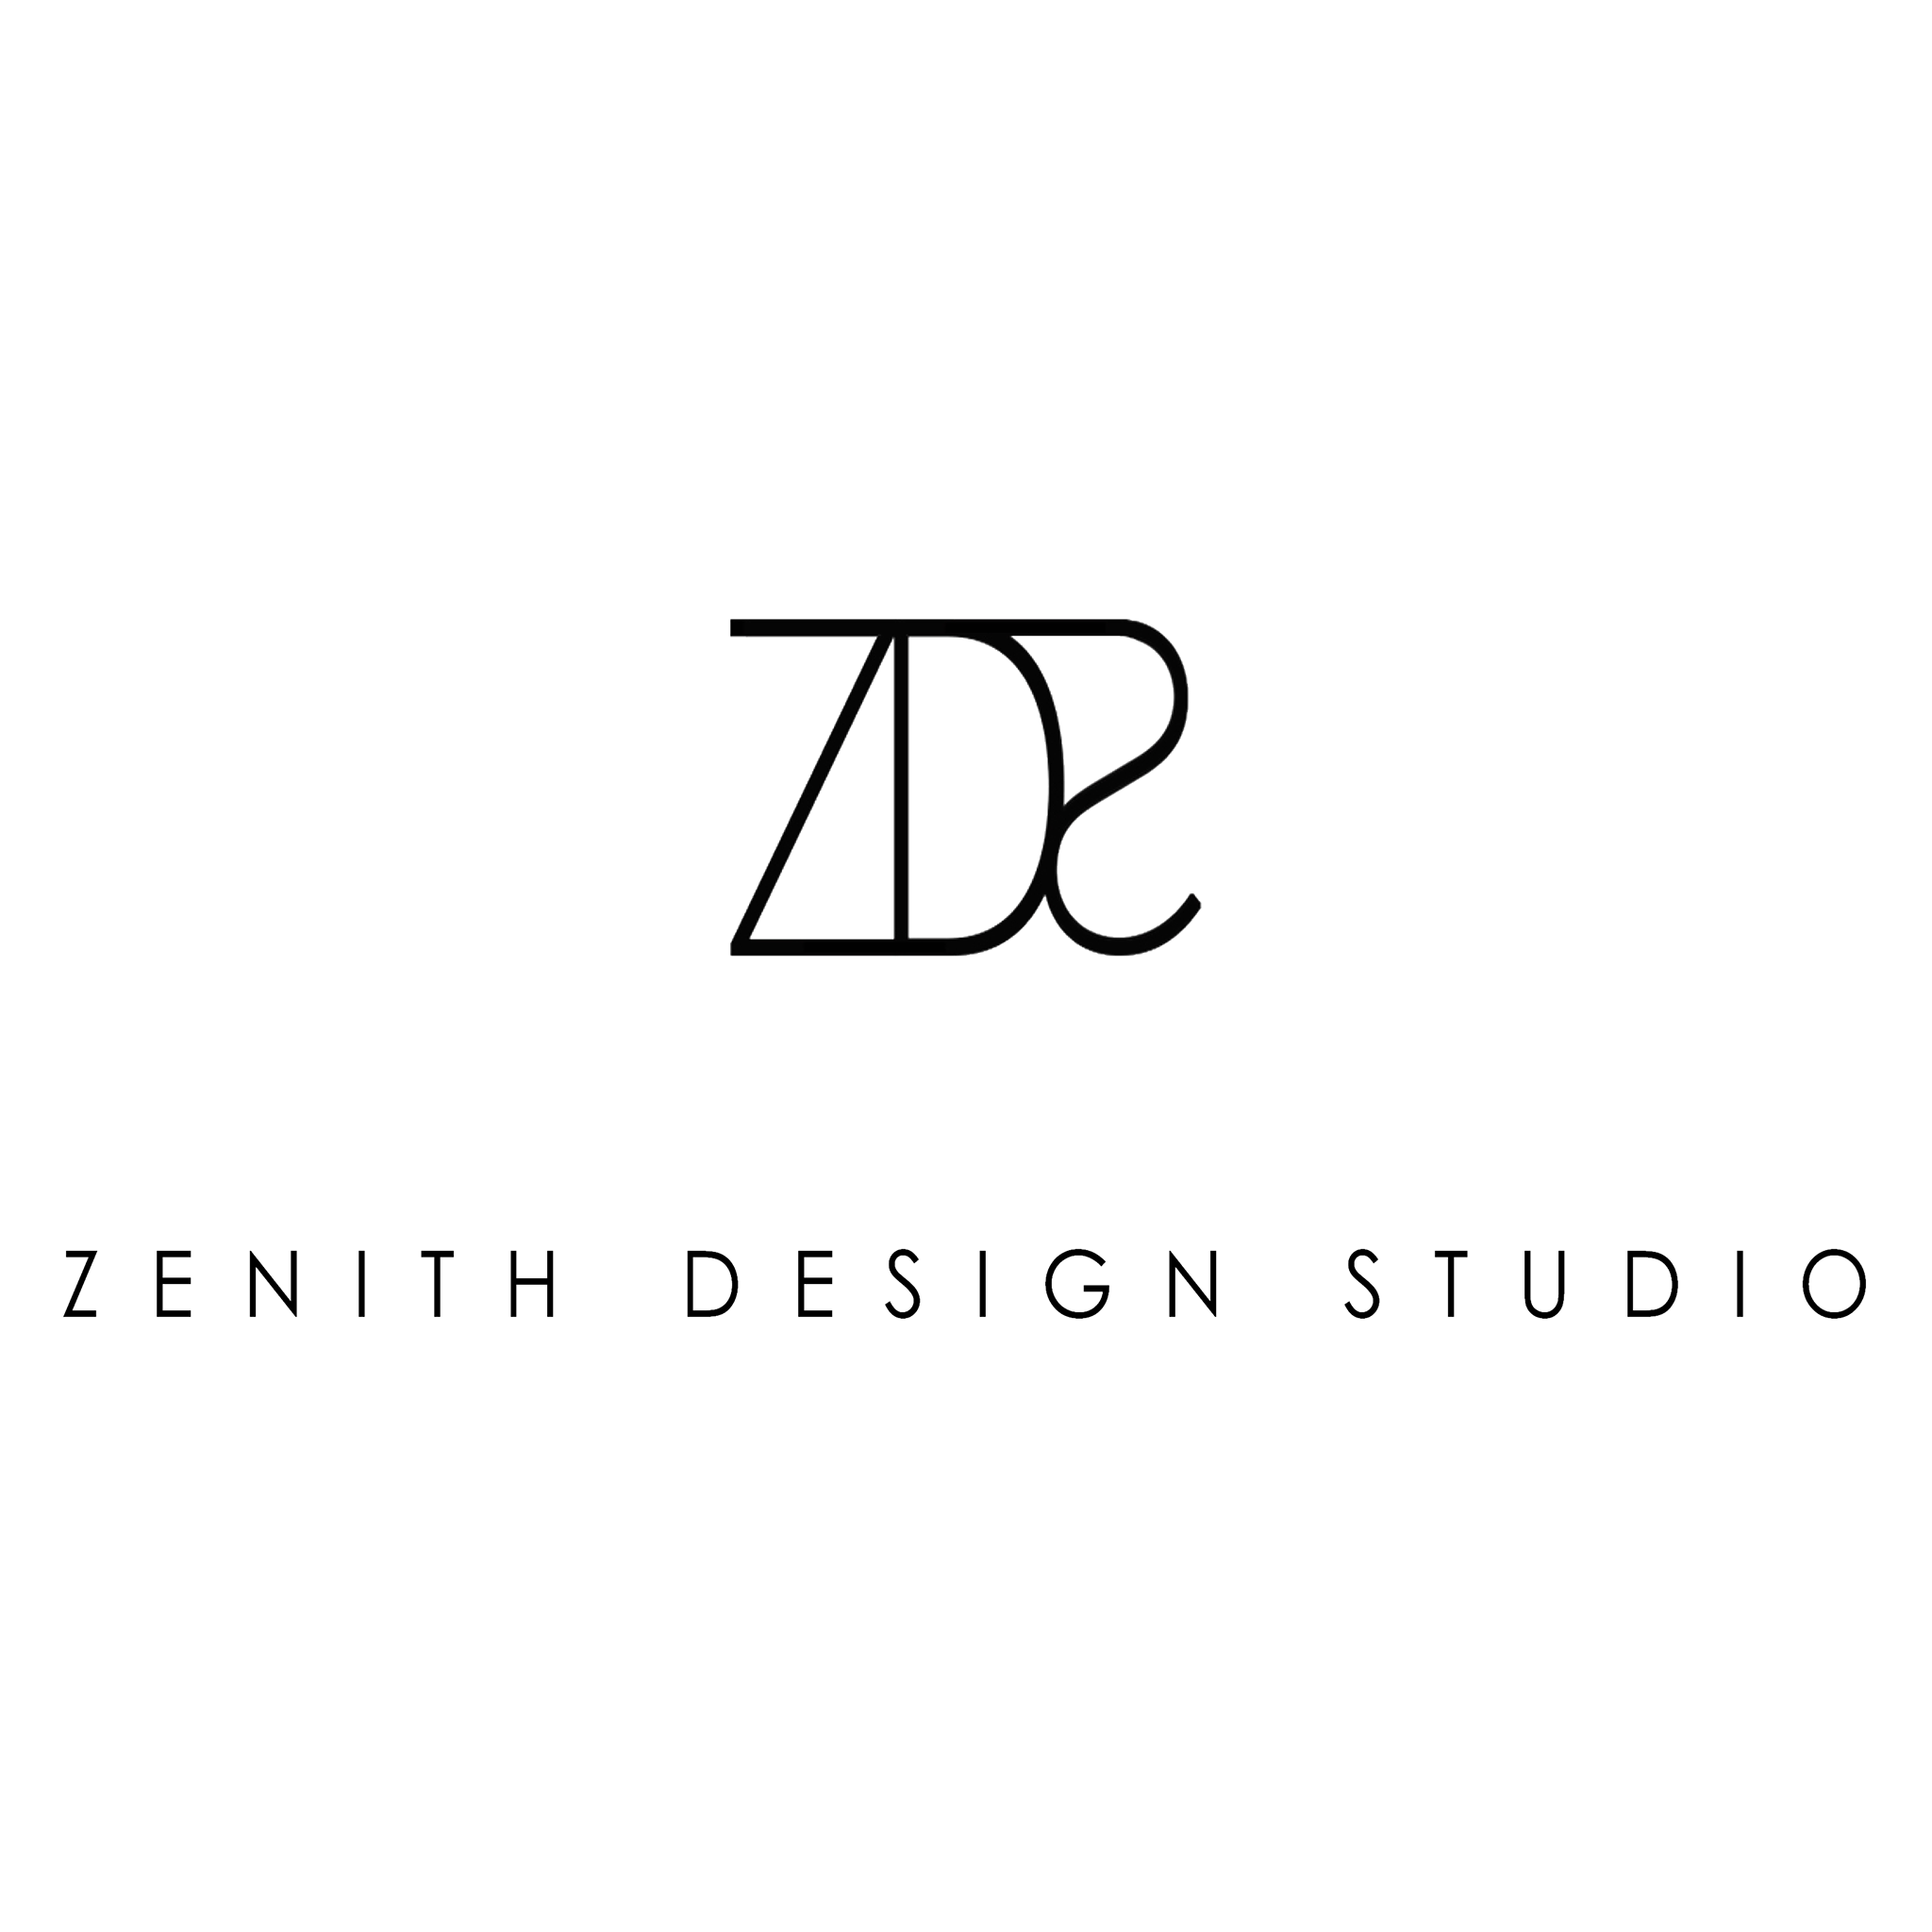 Zenith Design Studio|IT Services|Professional Services